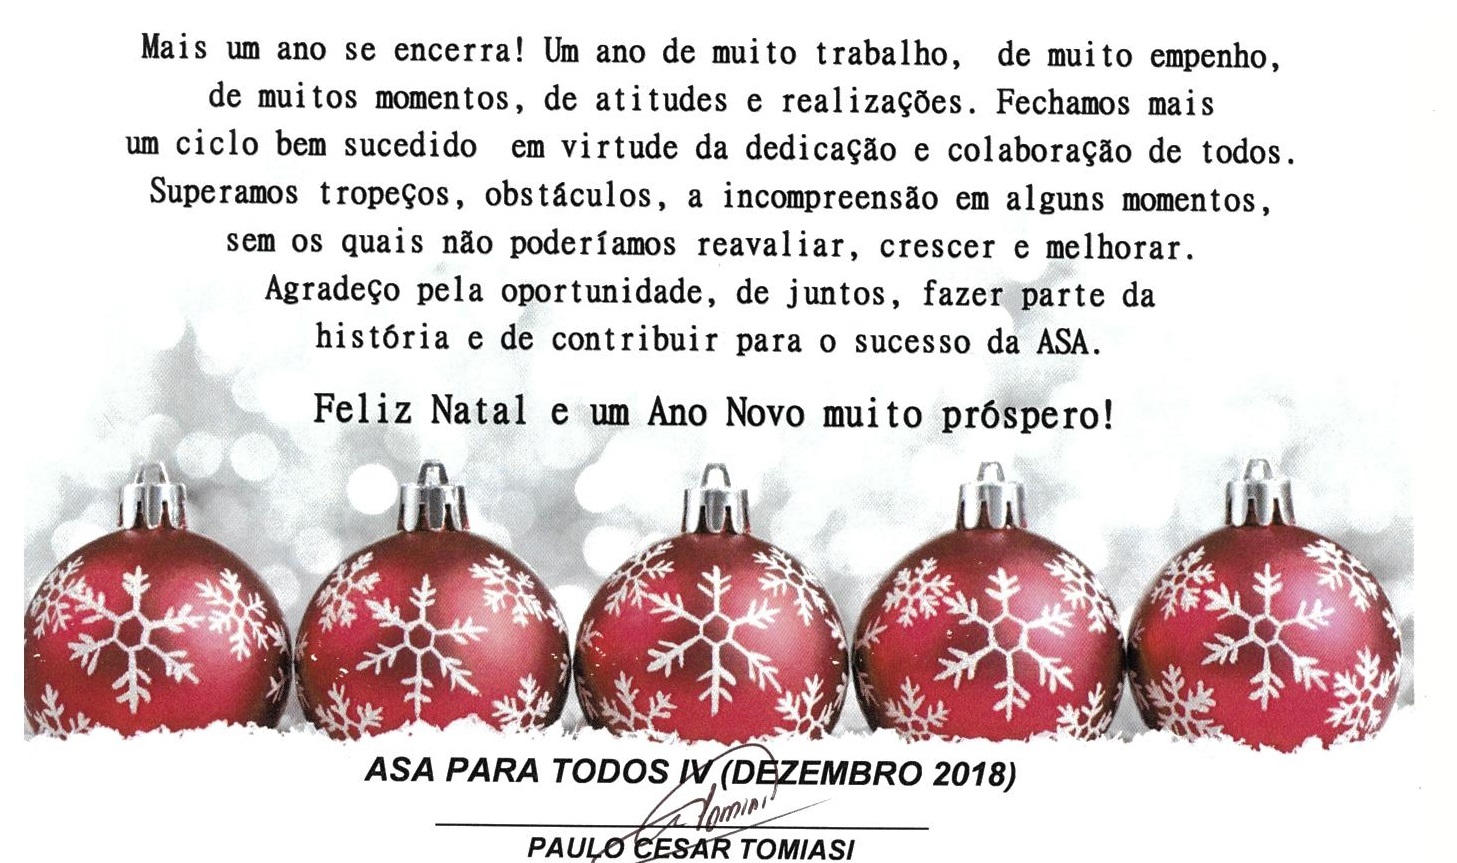 ASA Presidente Prudente: Feliz Natal e um próspero Ano Novo